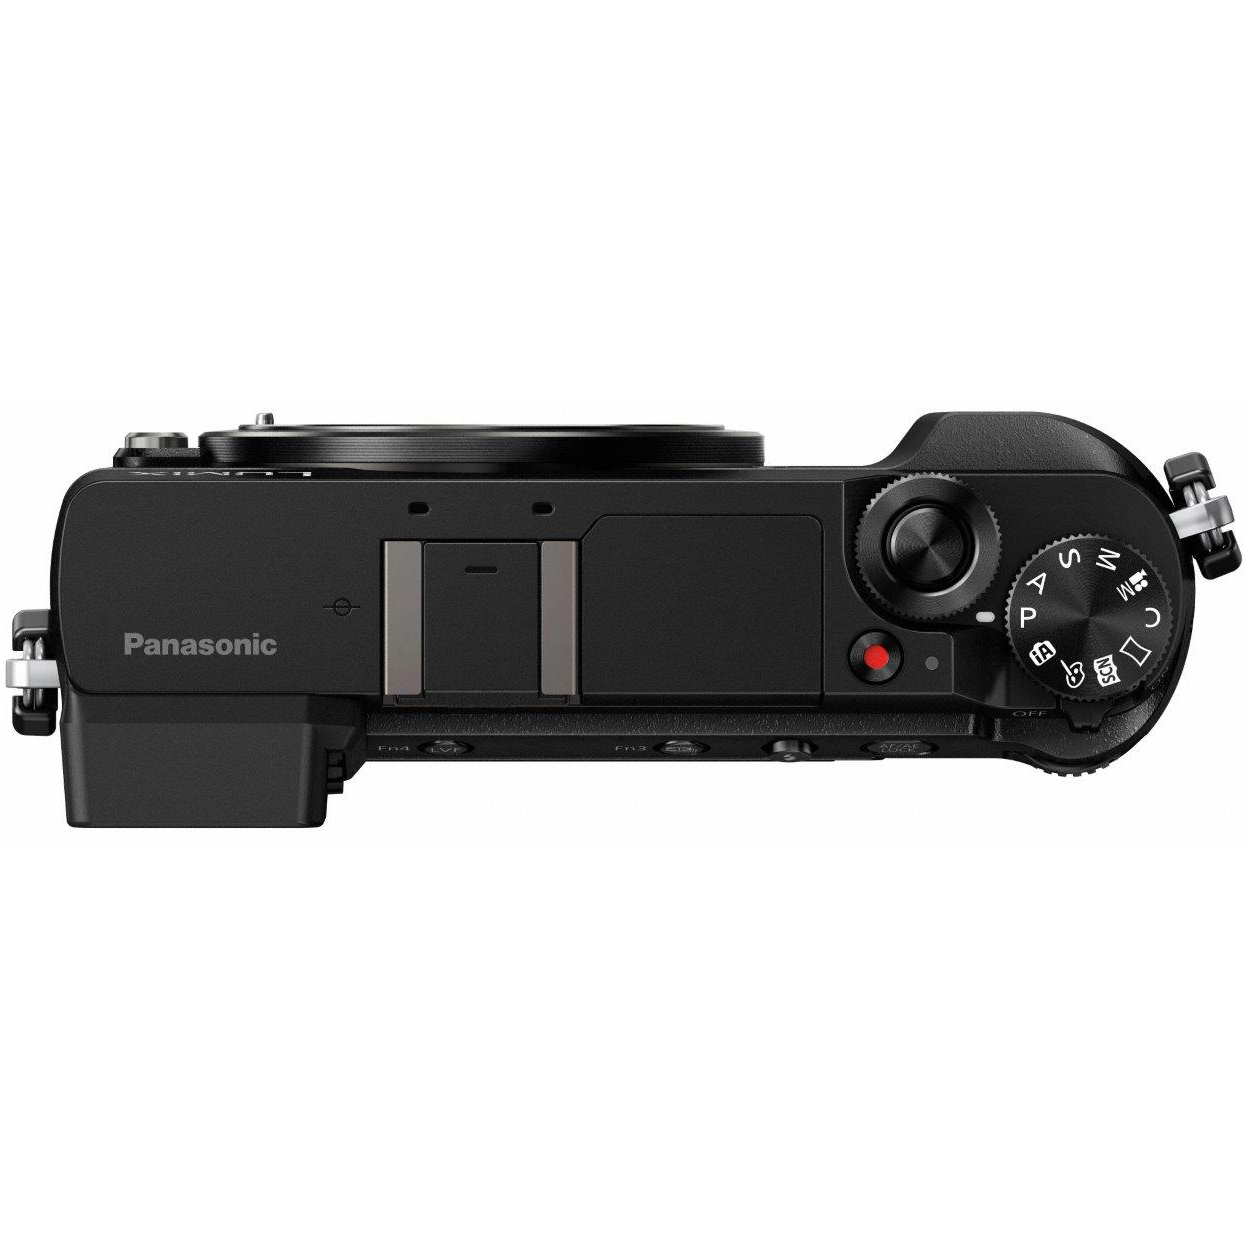 Panasonic LUMIX GX85 4K Mirrorless Camera with 12-32mm & 45-150mm Lenses -Black DMC-GX85WK - image 3 of 10